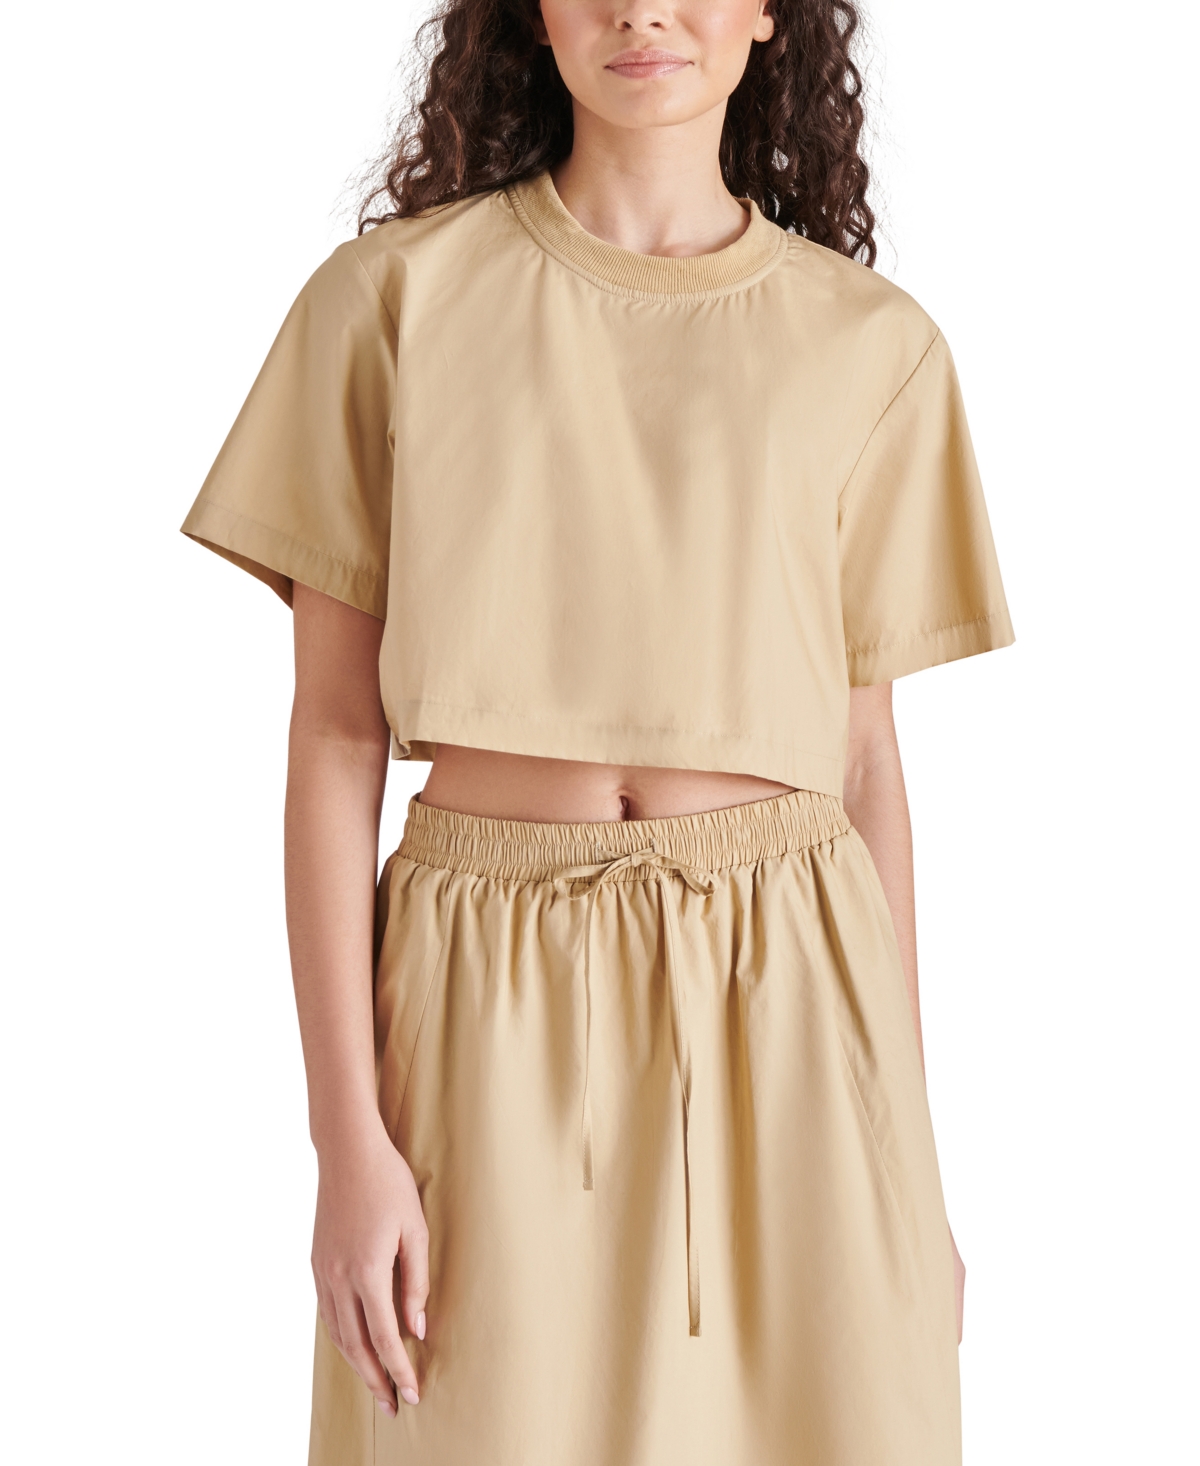 Women's Sunny Short-Sleeve Cotton Top - Khaki